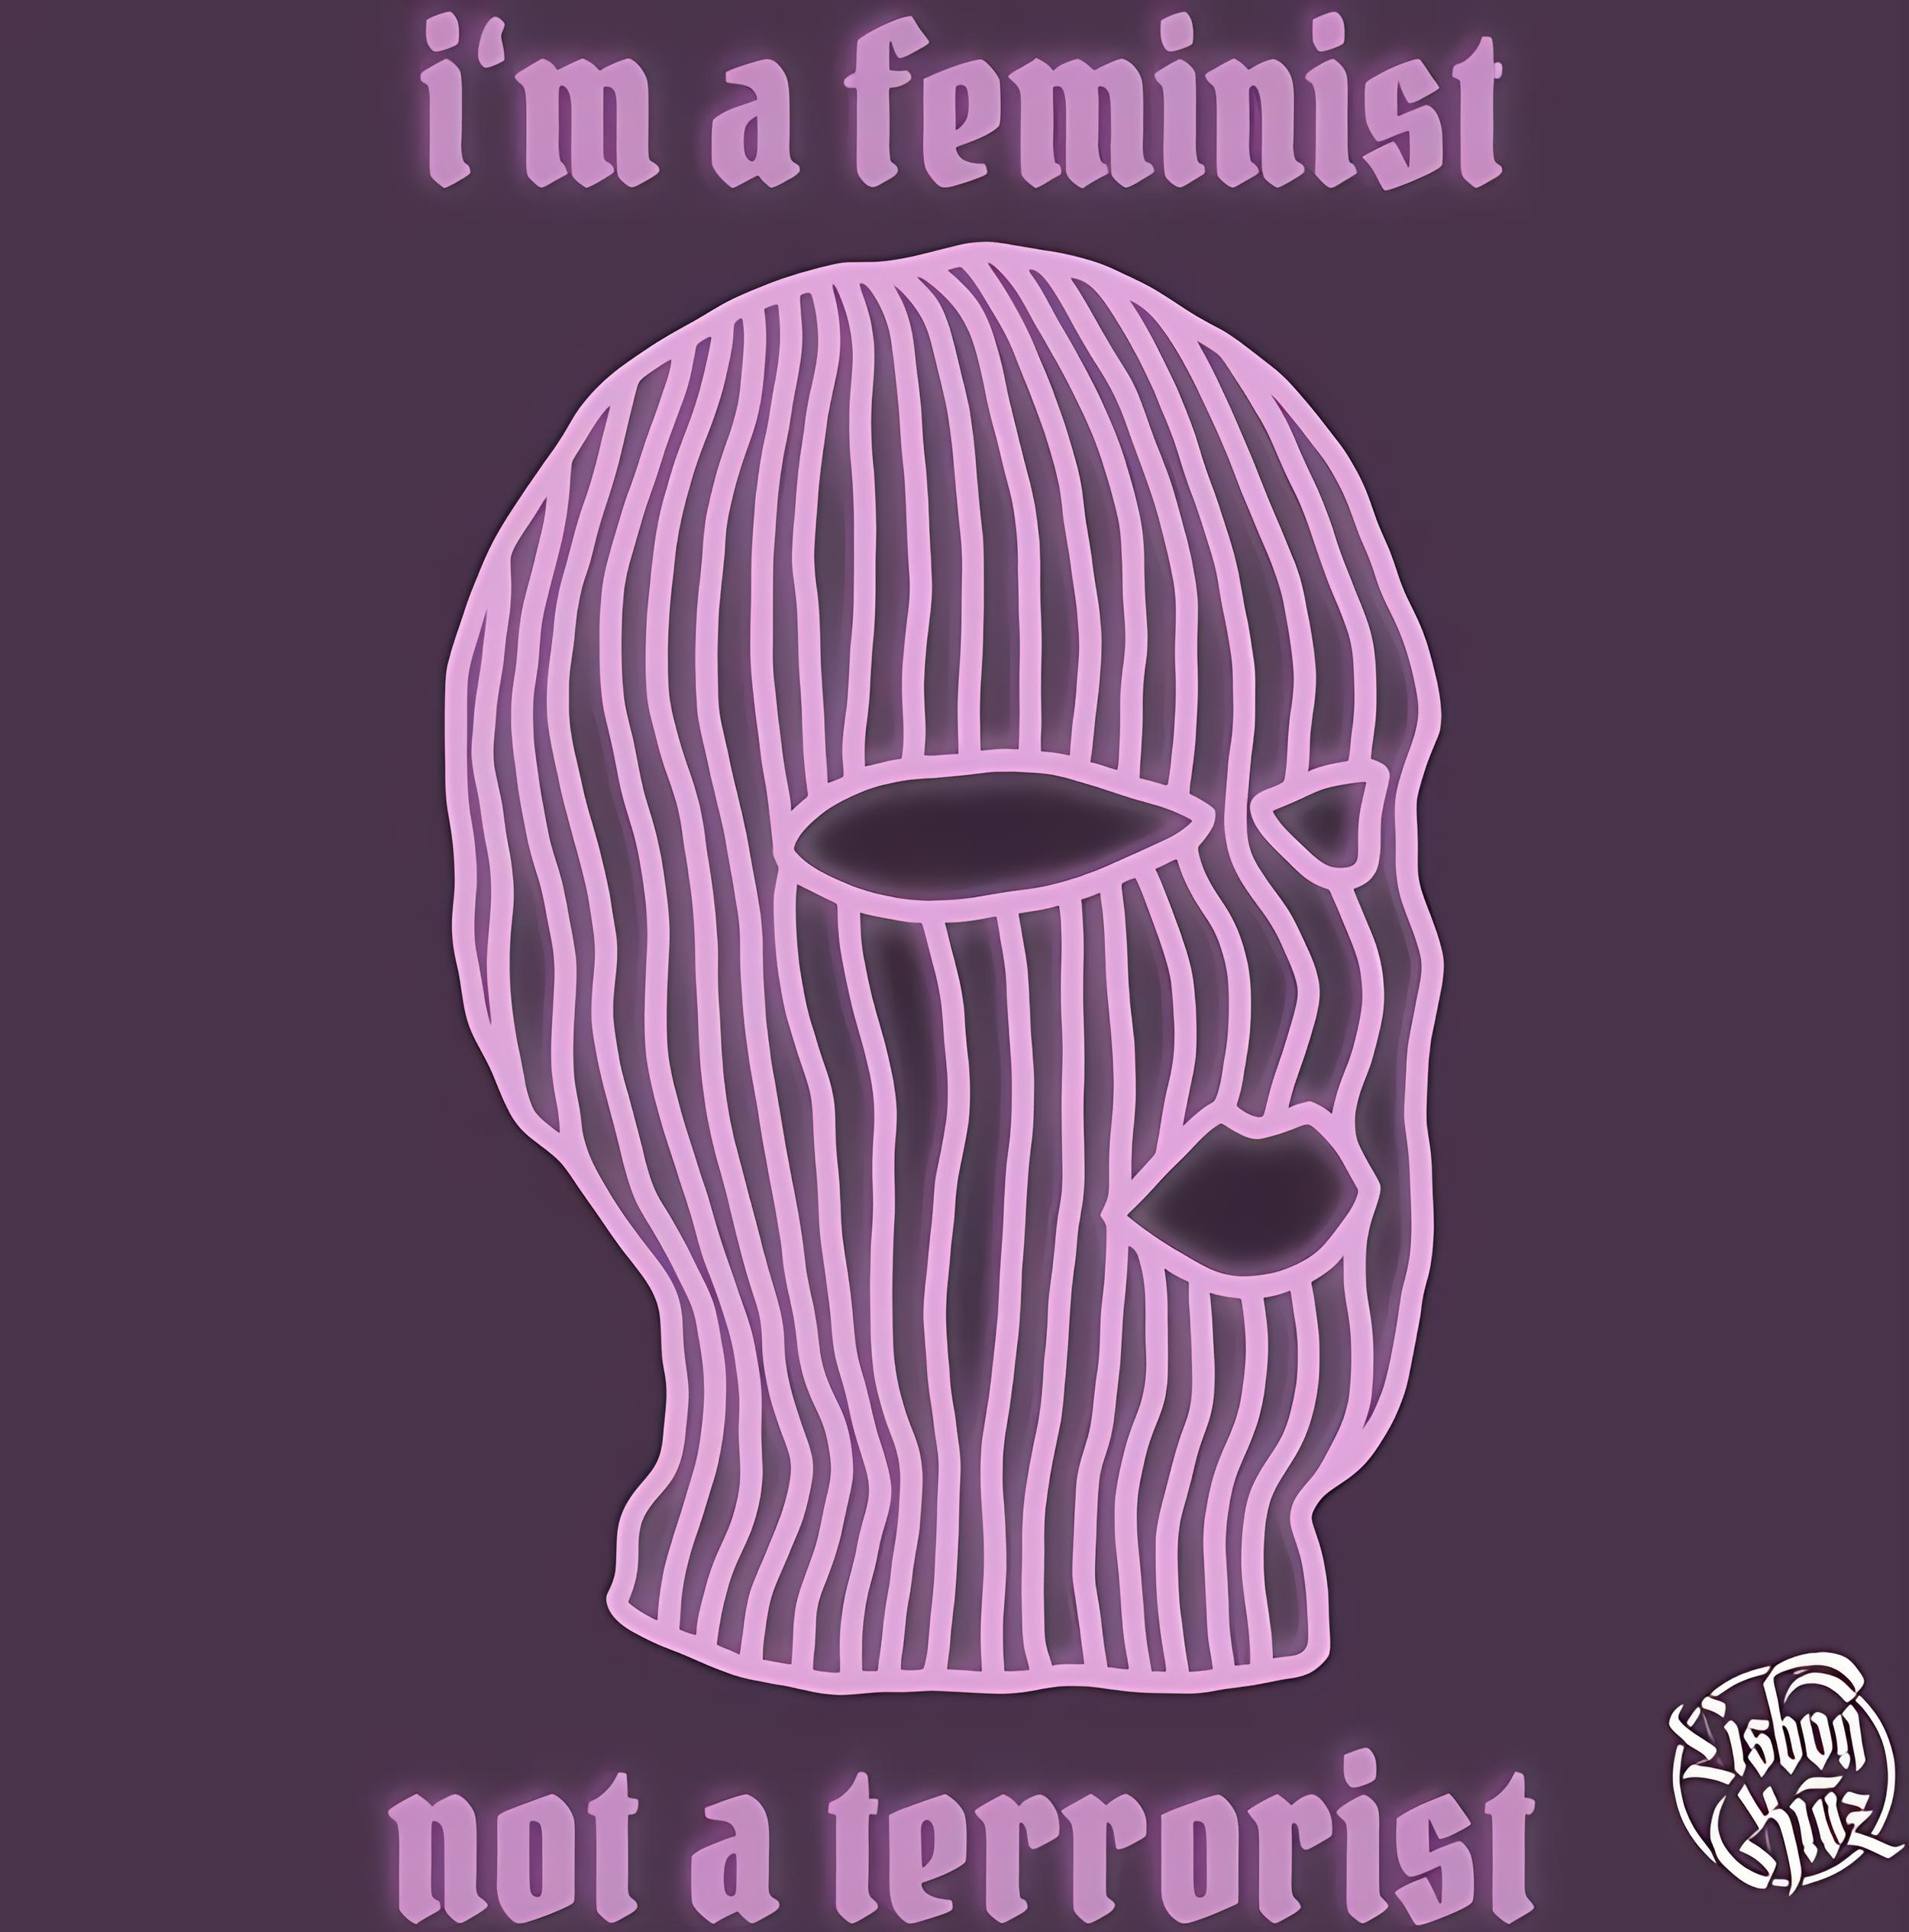 I'm a feminist, not a terrorist